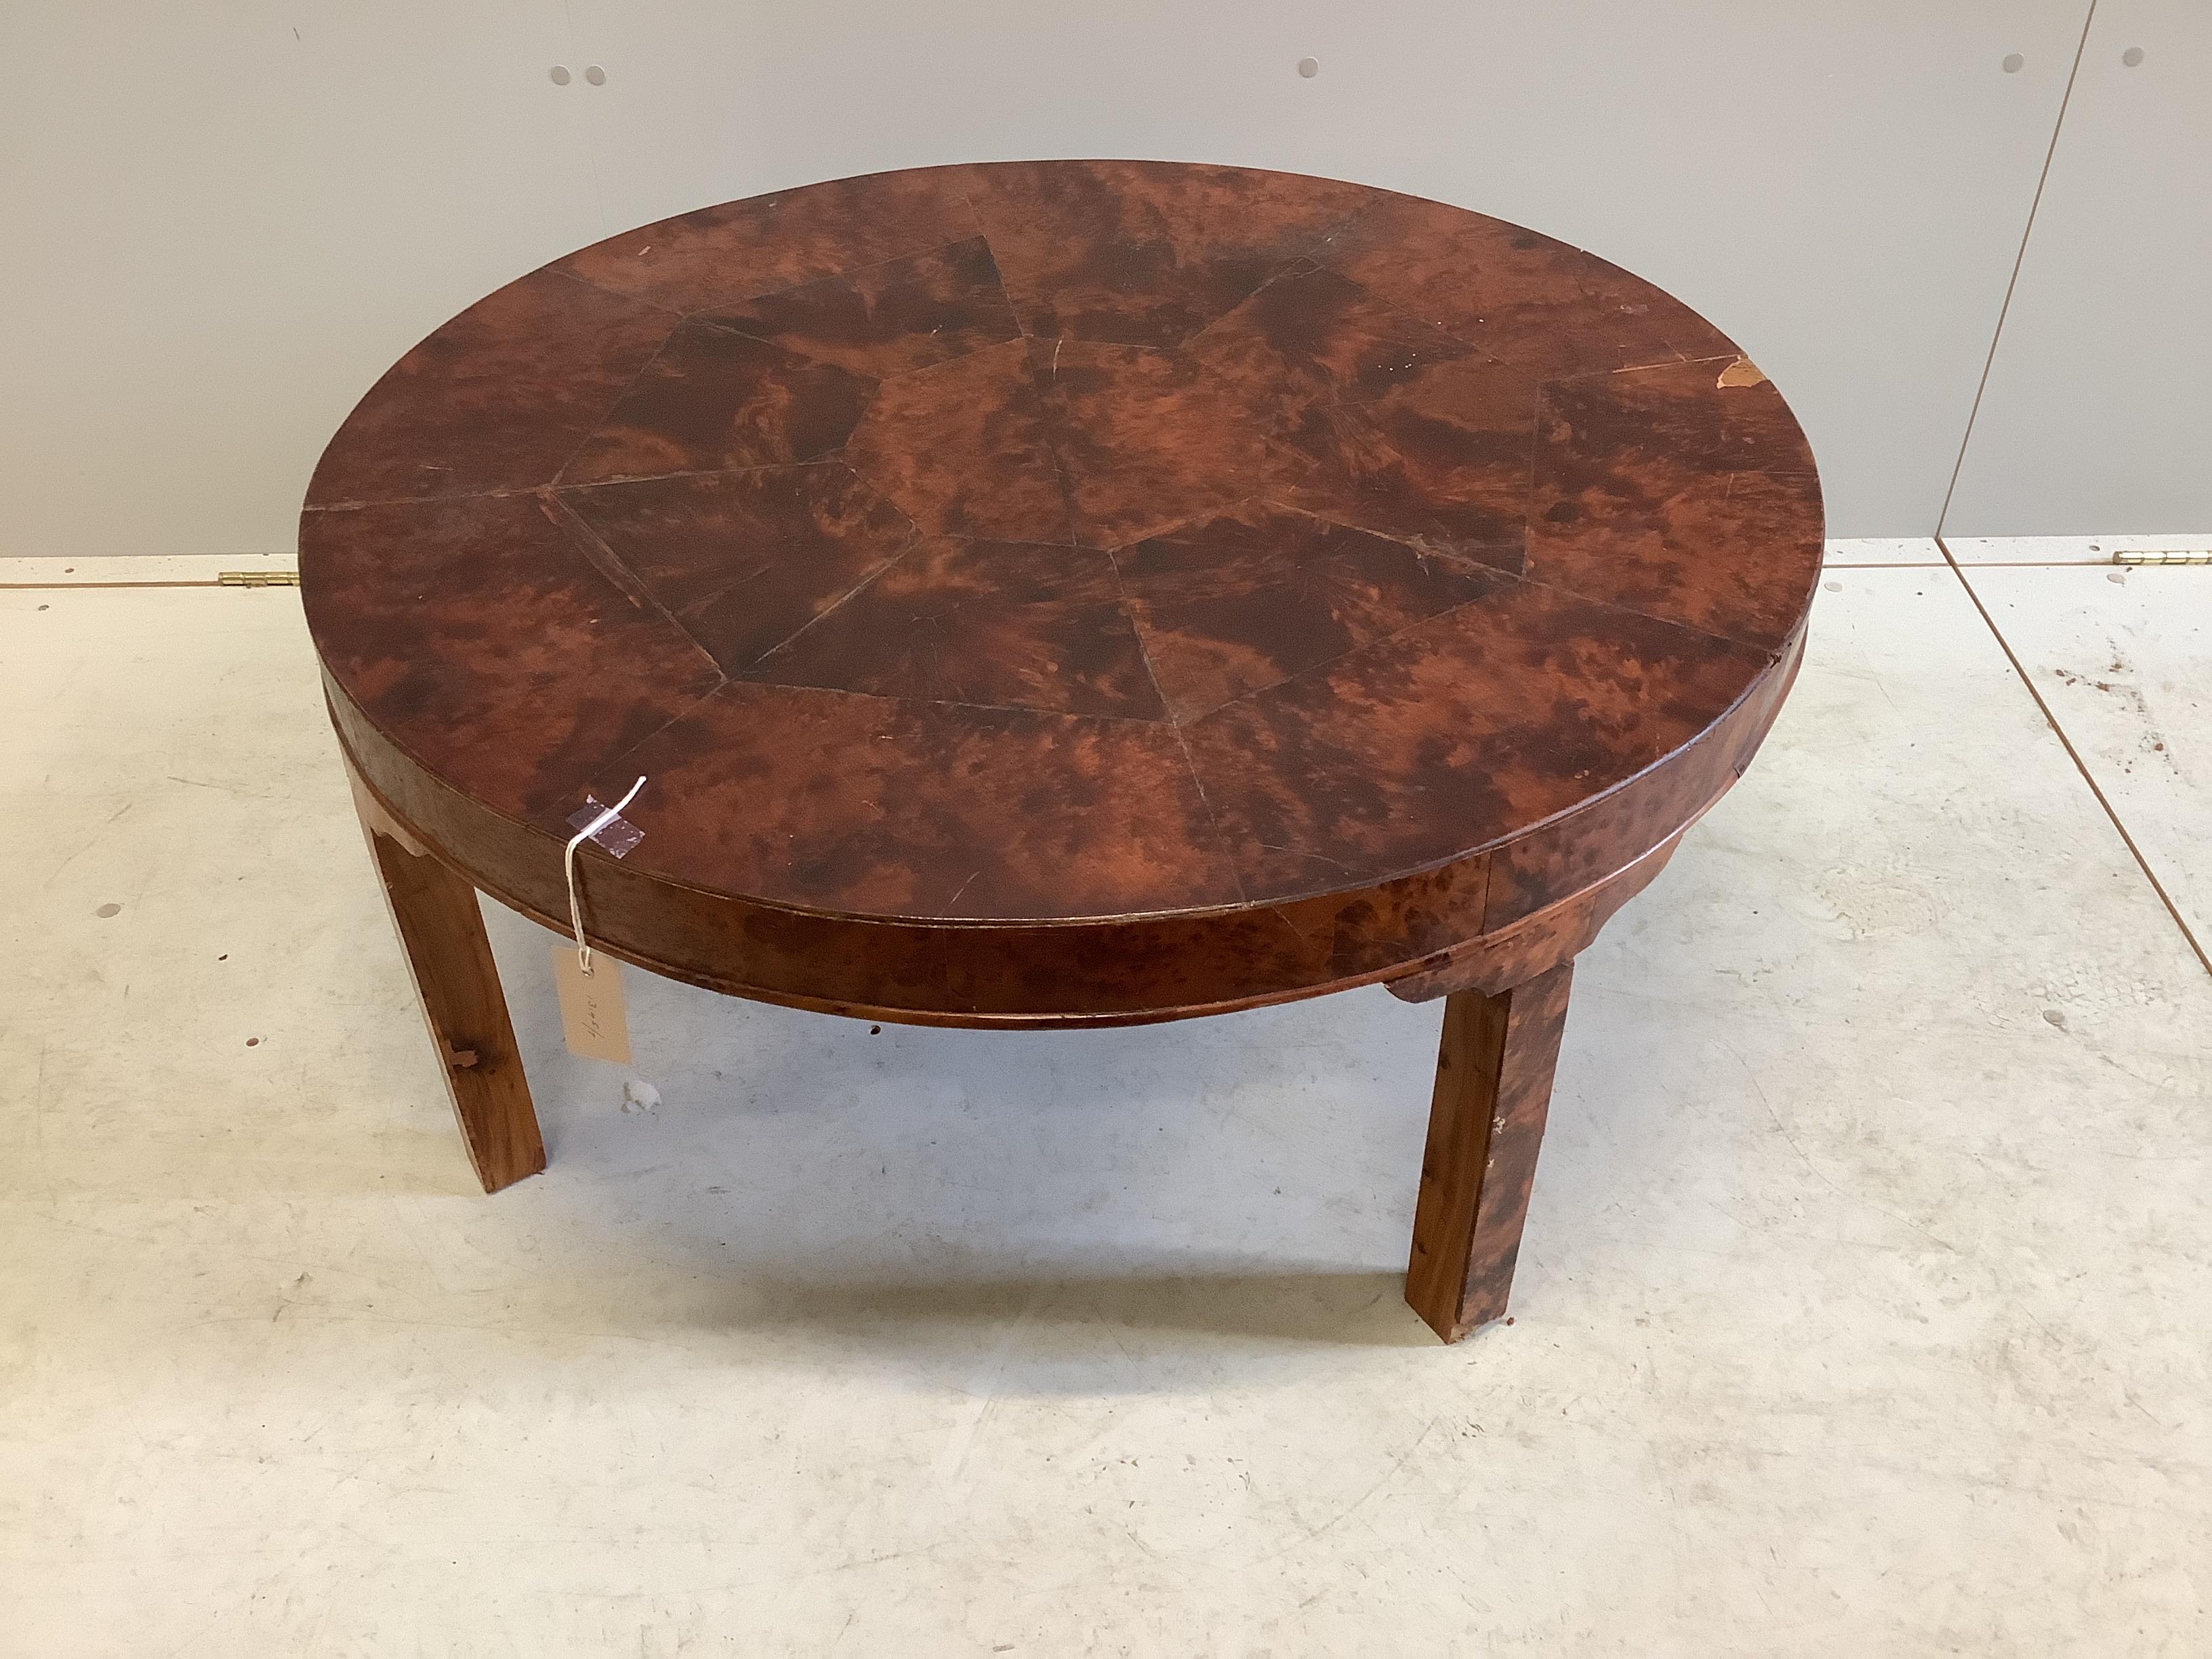 A circular amboyna coffee table, diameter 91cm, height 40cm